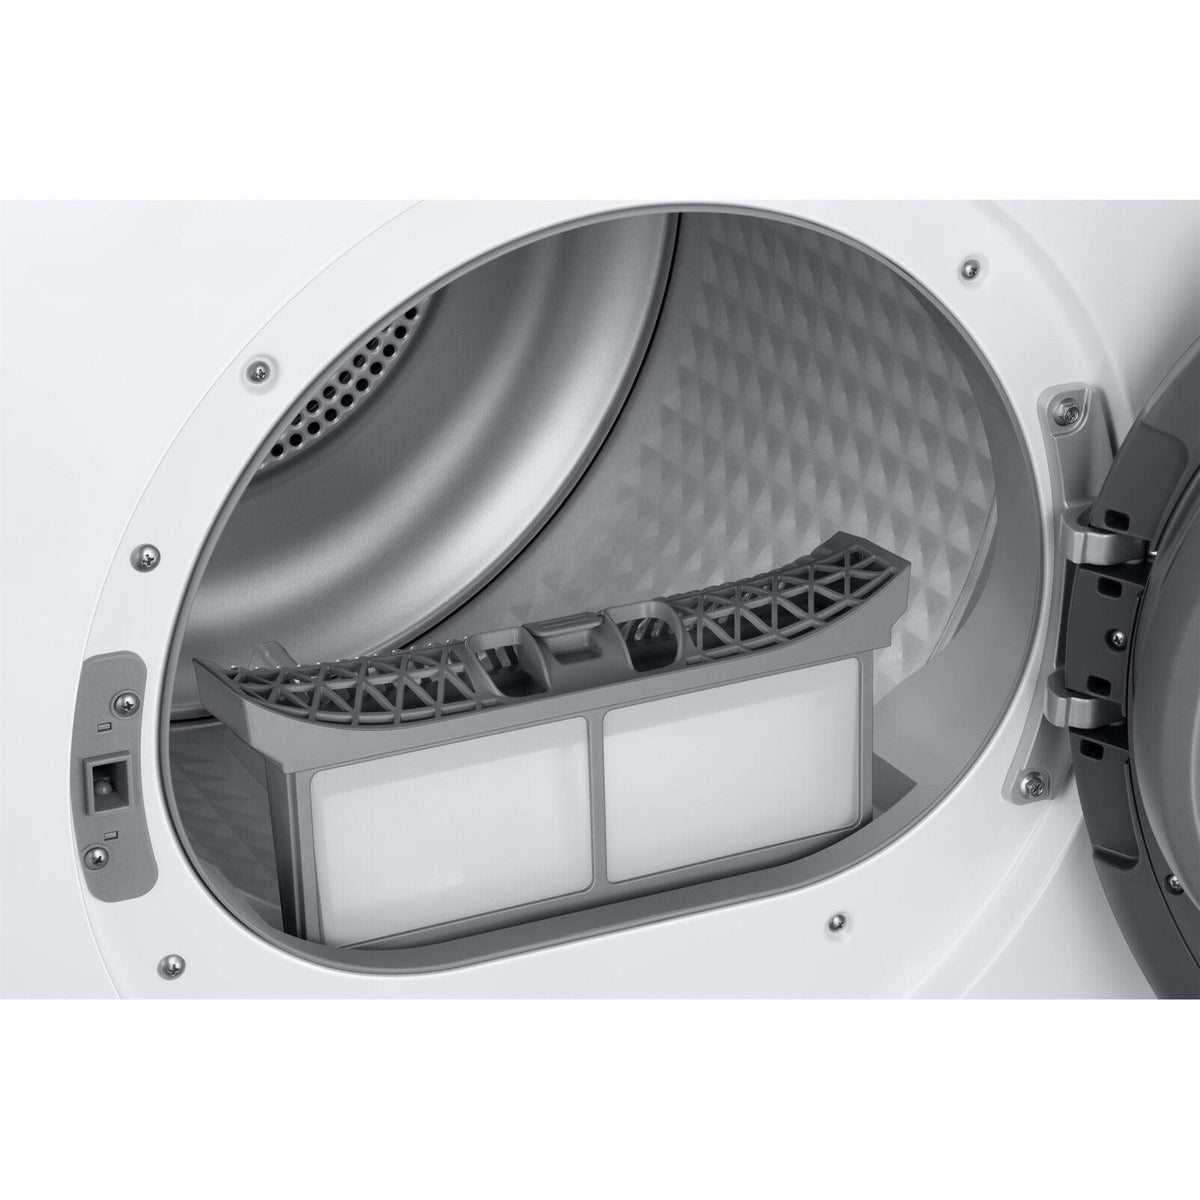 Samsung Series 5 DV90TA04AH/EU Heat Pump Tumbler Dryer 9kg - White | DV90TA040AH from DID Electrical - guaranteed Irish, guaranteed quality service. (6977575190716)